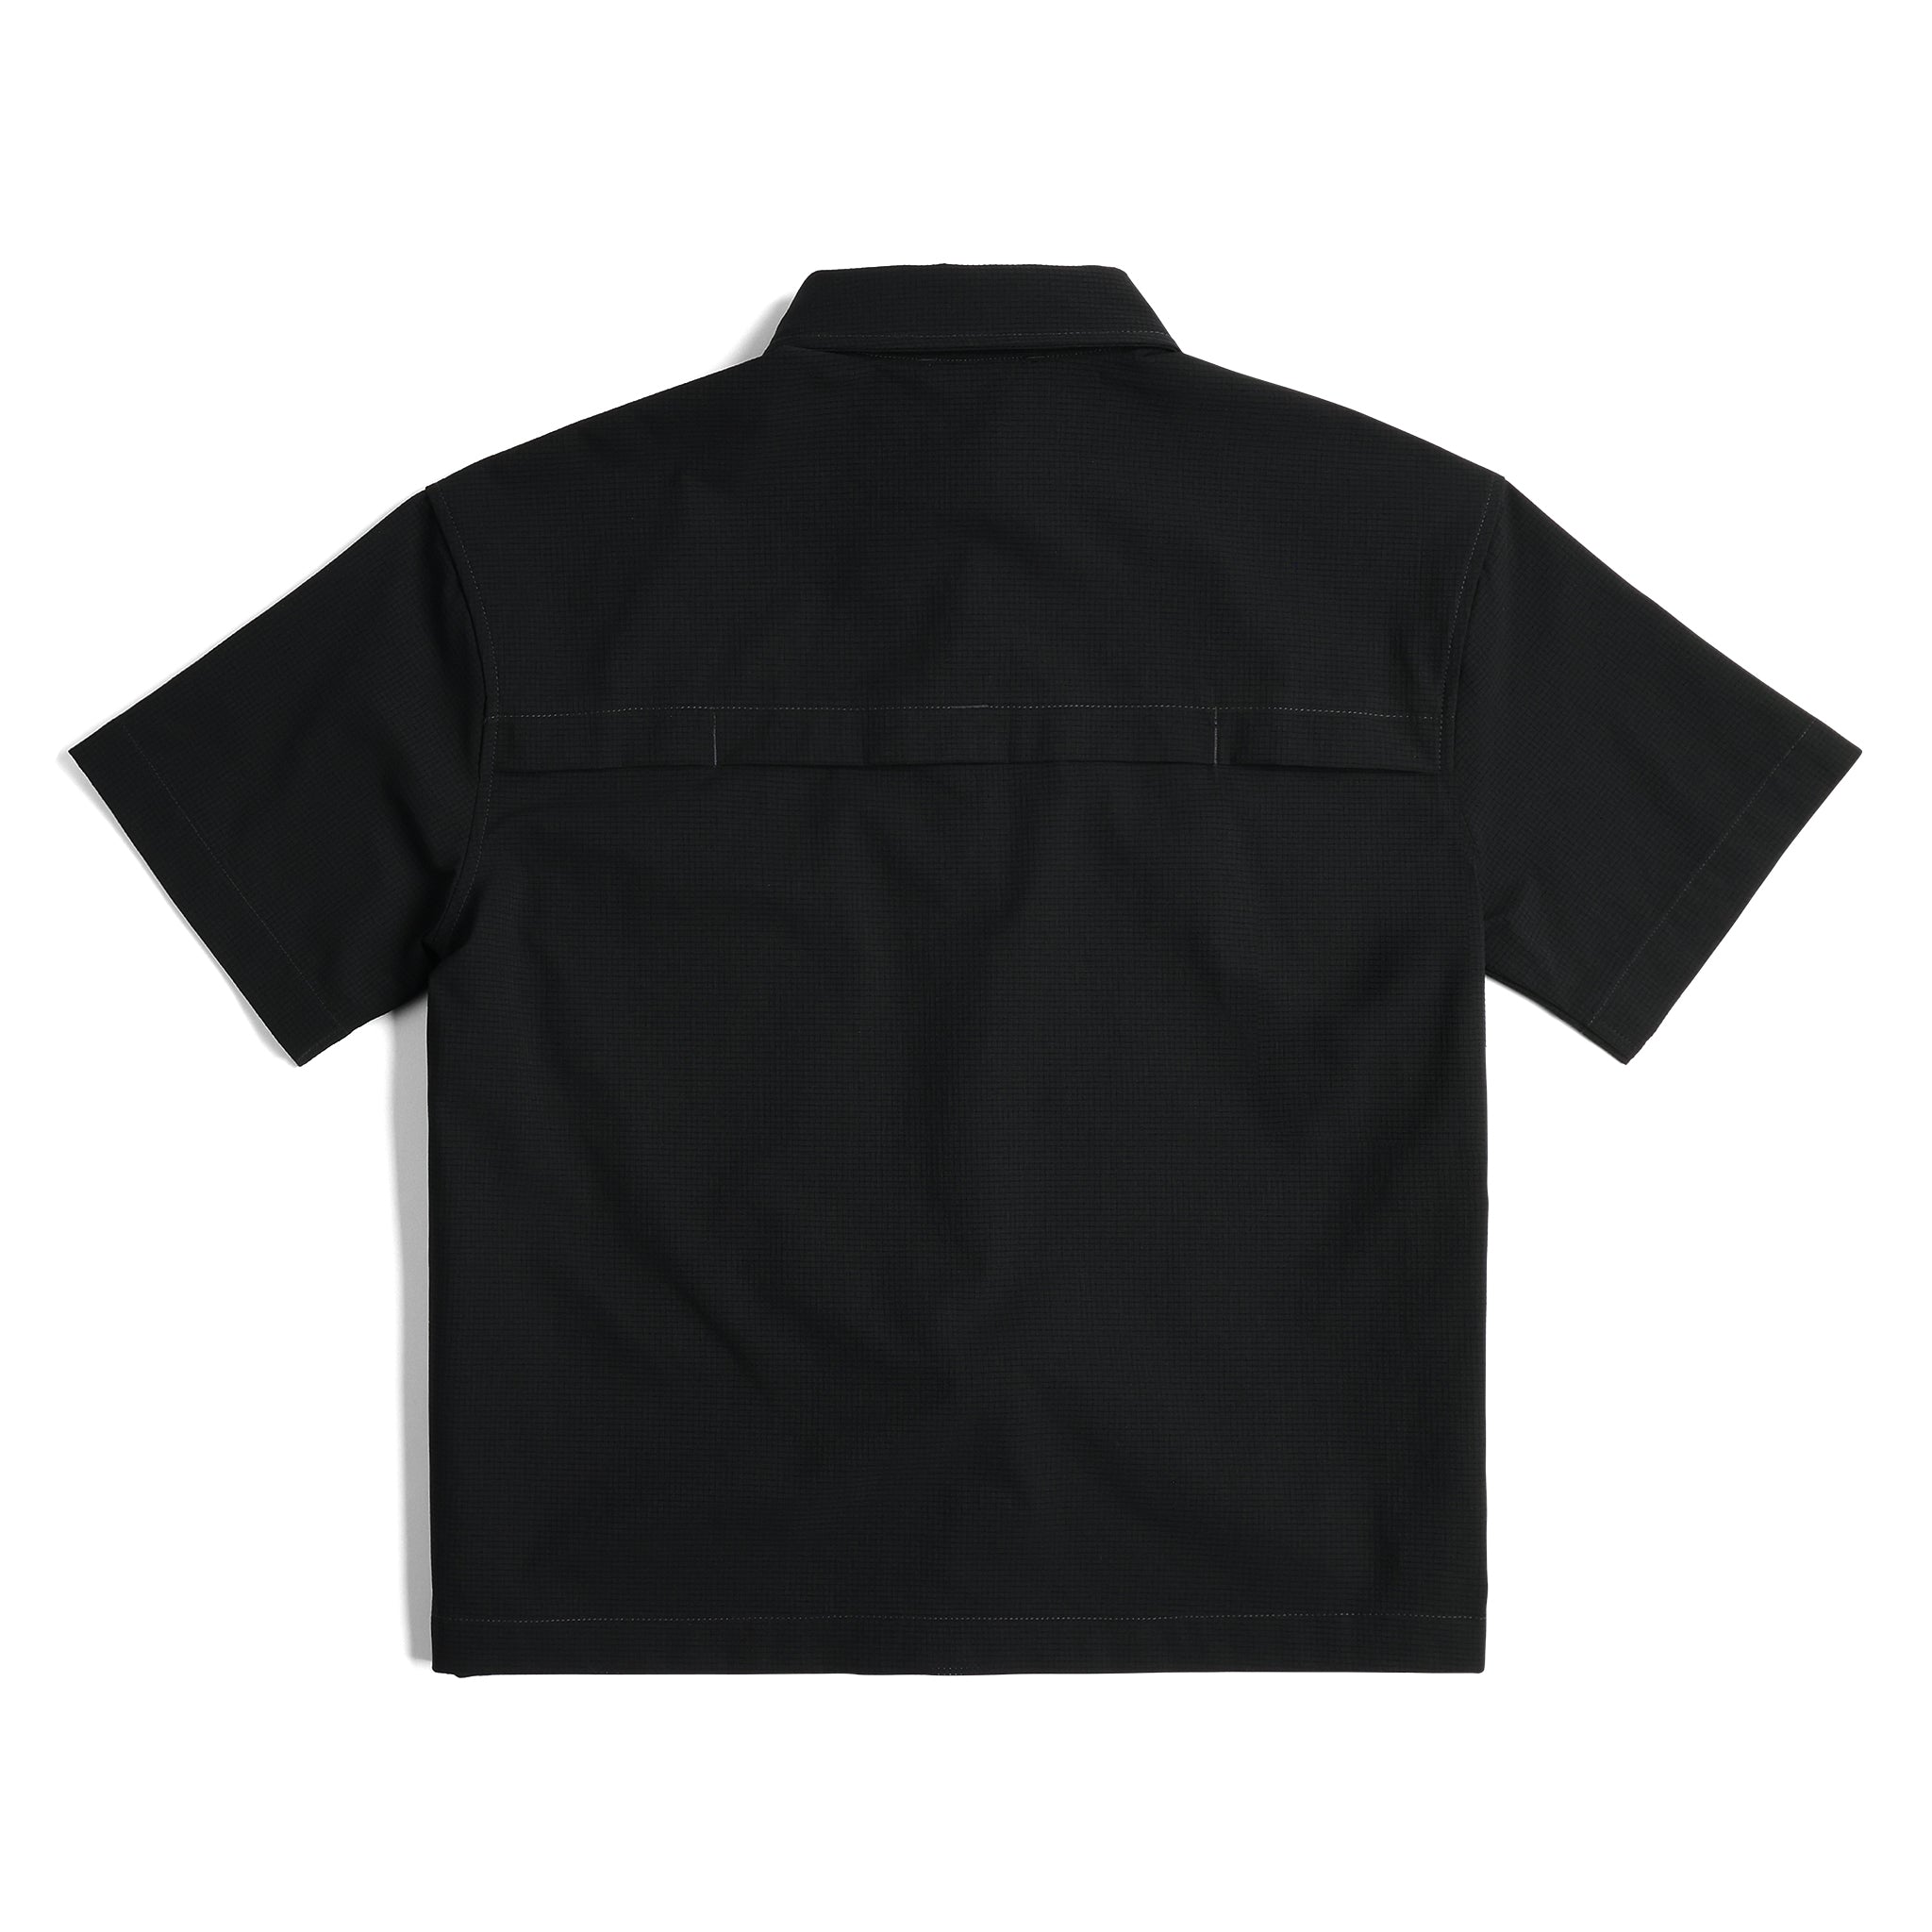 Back View of Topo Designs Retro River Shirt Ss - Women's in "Black"